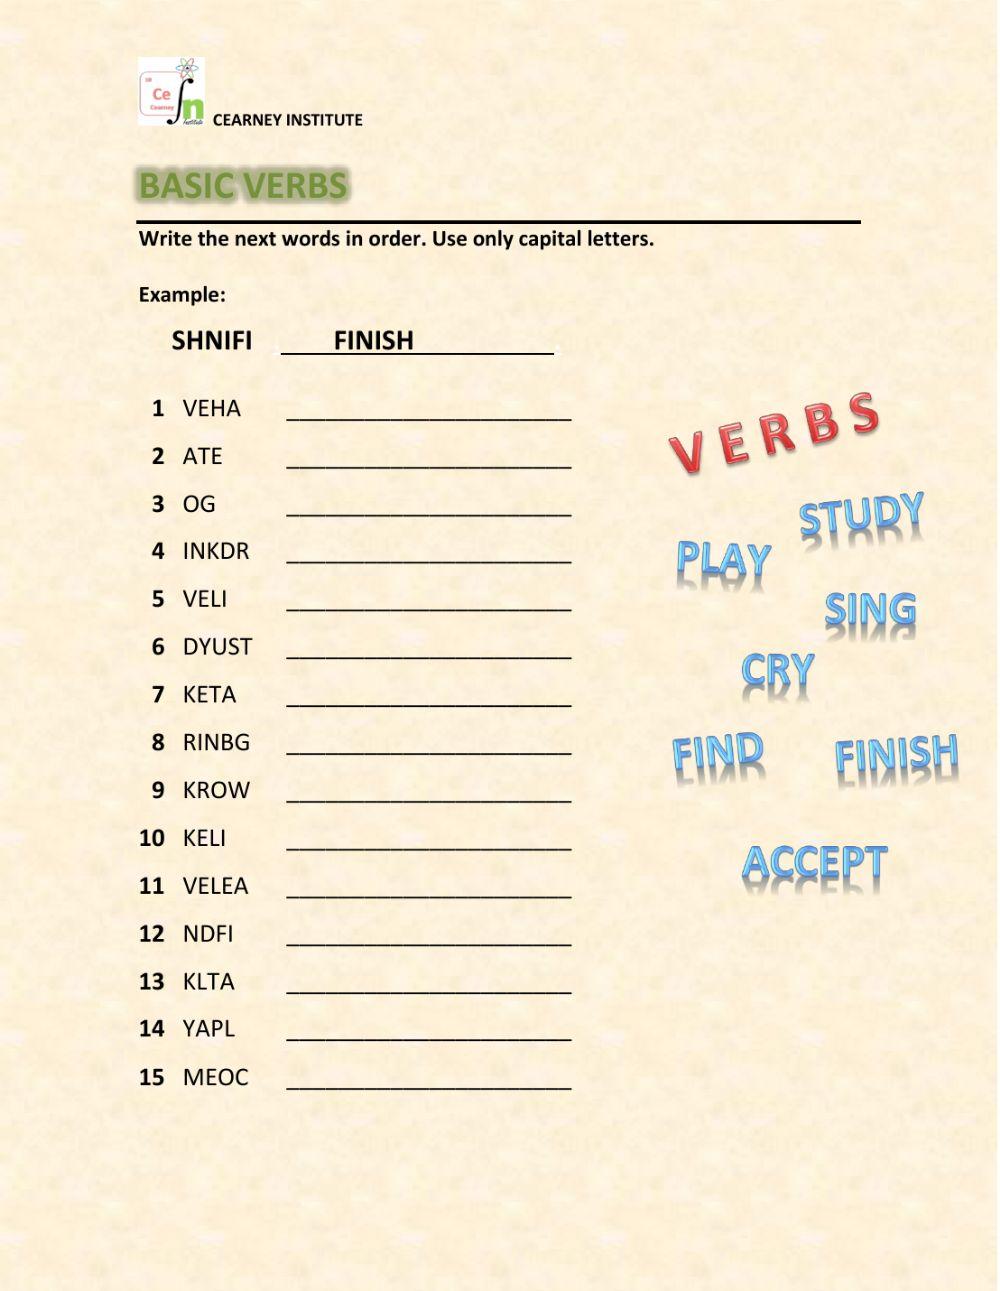 Basic verbs